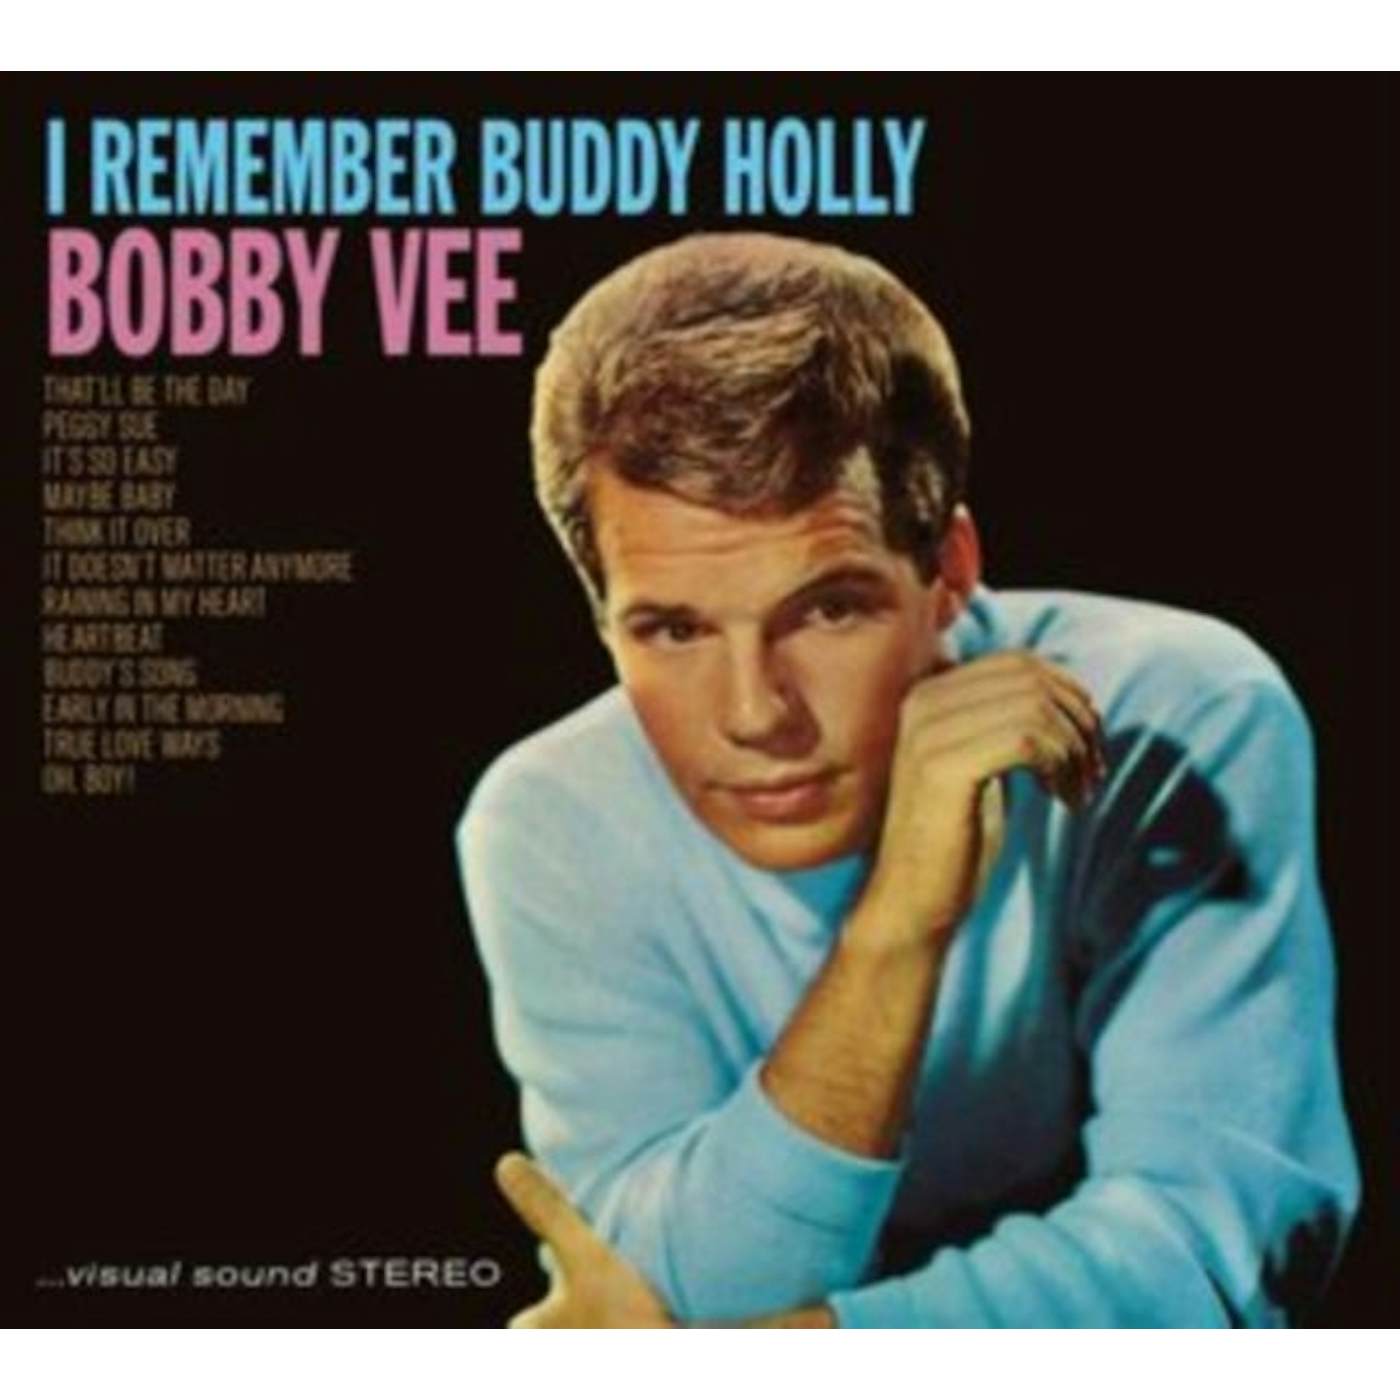 Bobby Vee CD - I Remember Buddy Holly + Meets The Ventures (+7 Bonus Tracks)